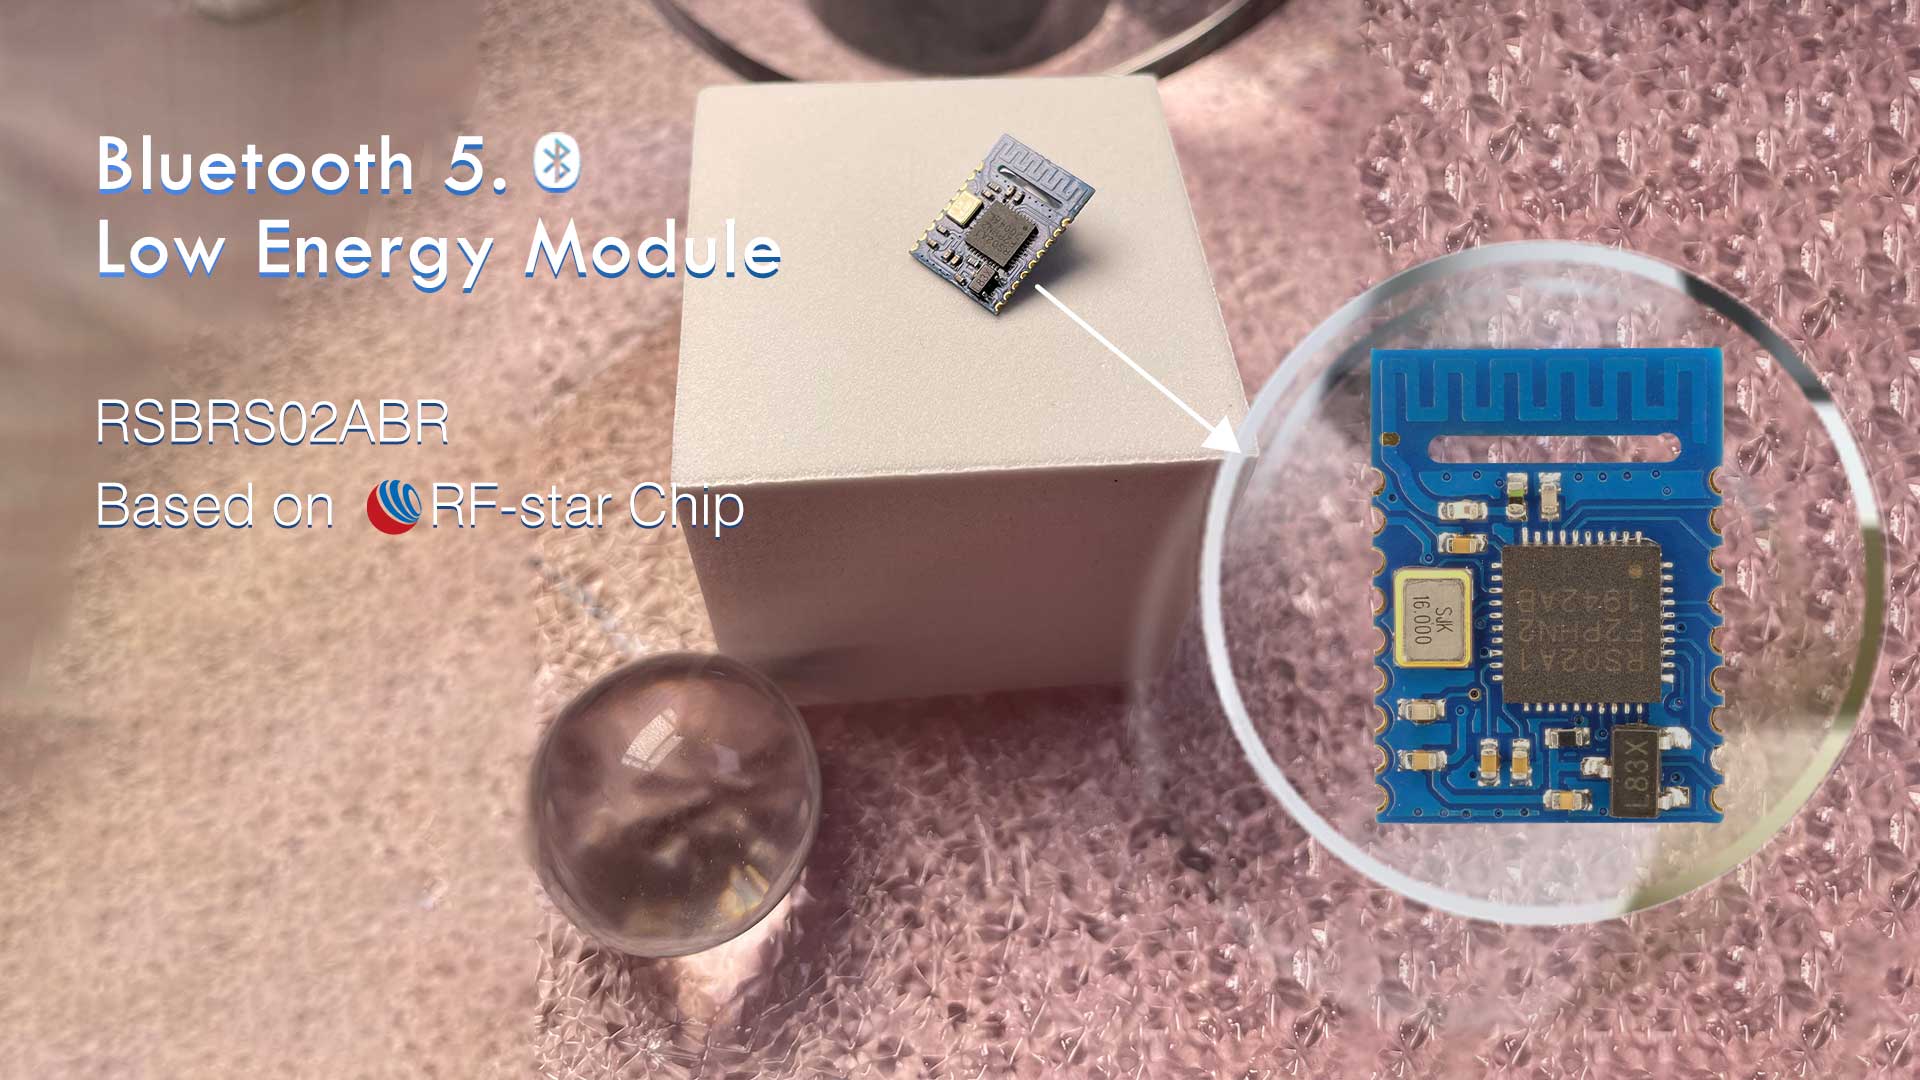 RF-star 칩 기반 Bluetooth 5.0 저에너지 모듈 RSBRS02ABR